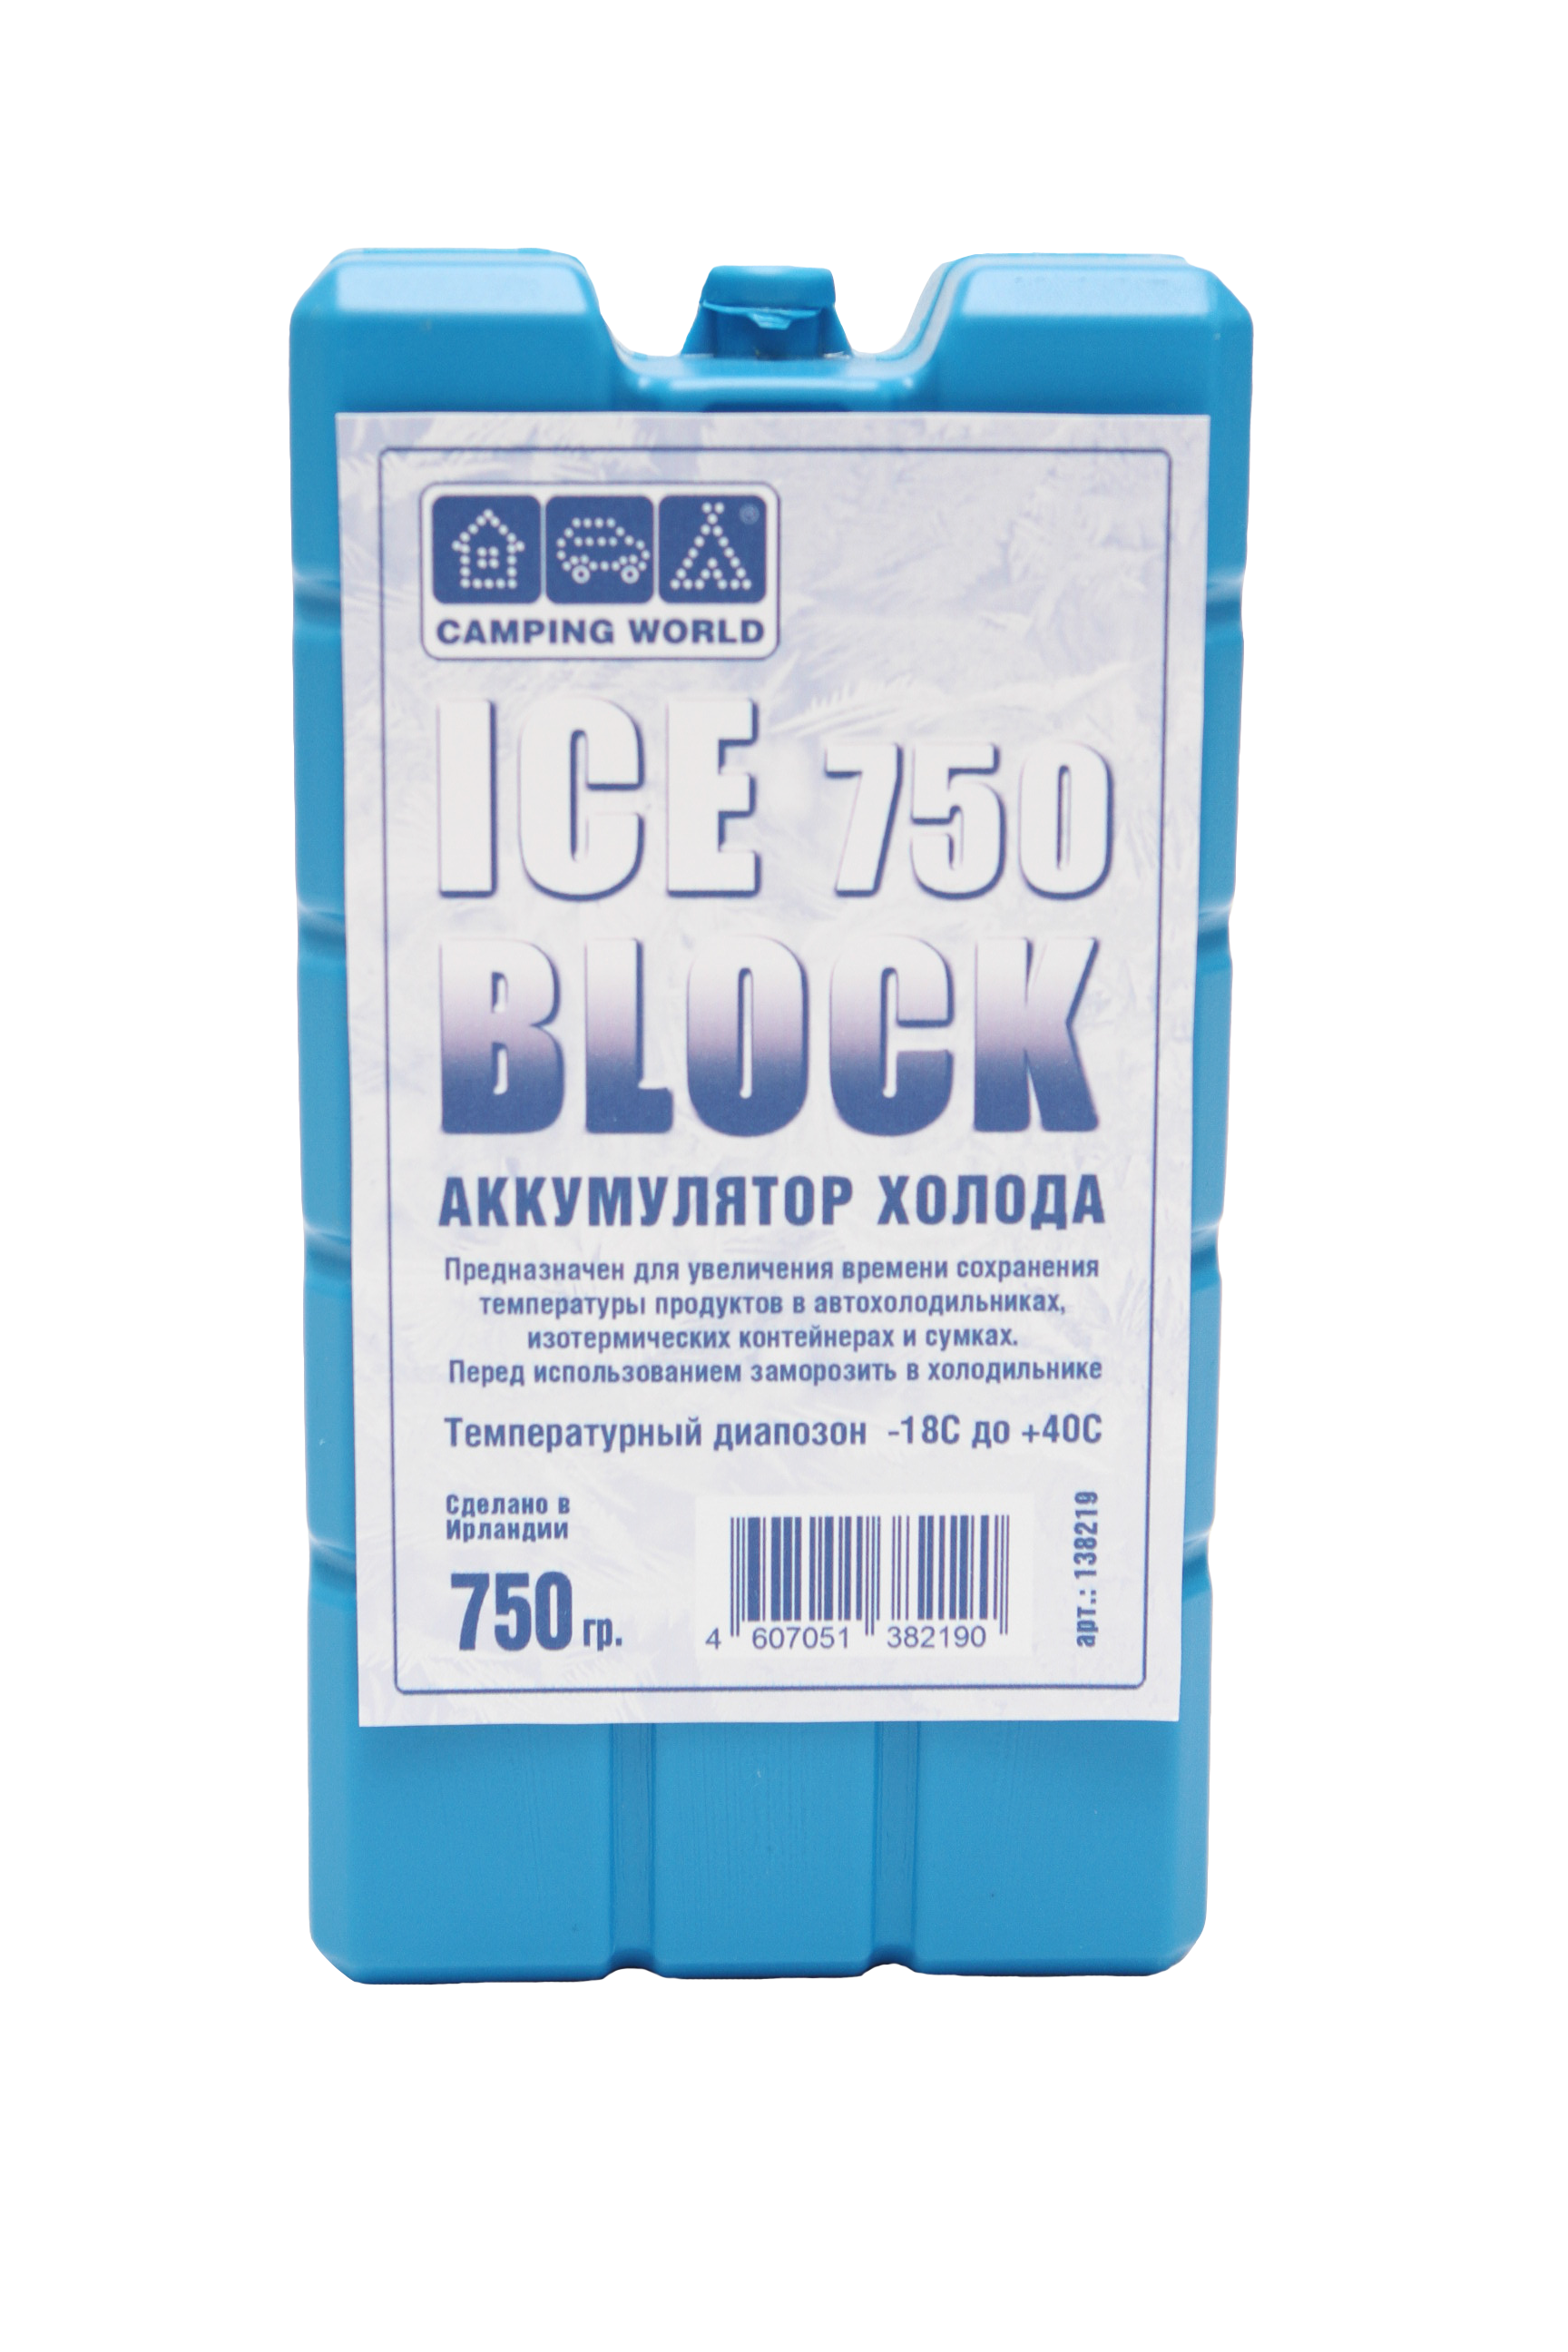 Фото аккумулятор холода campingworld iceblock 750г